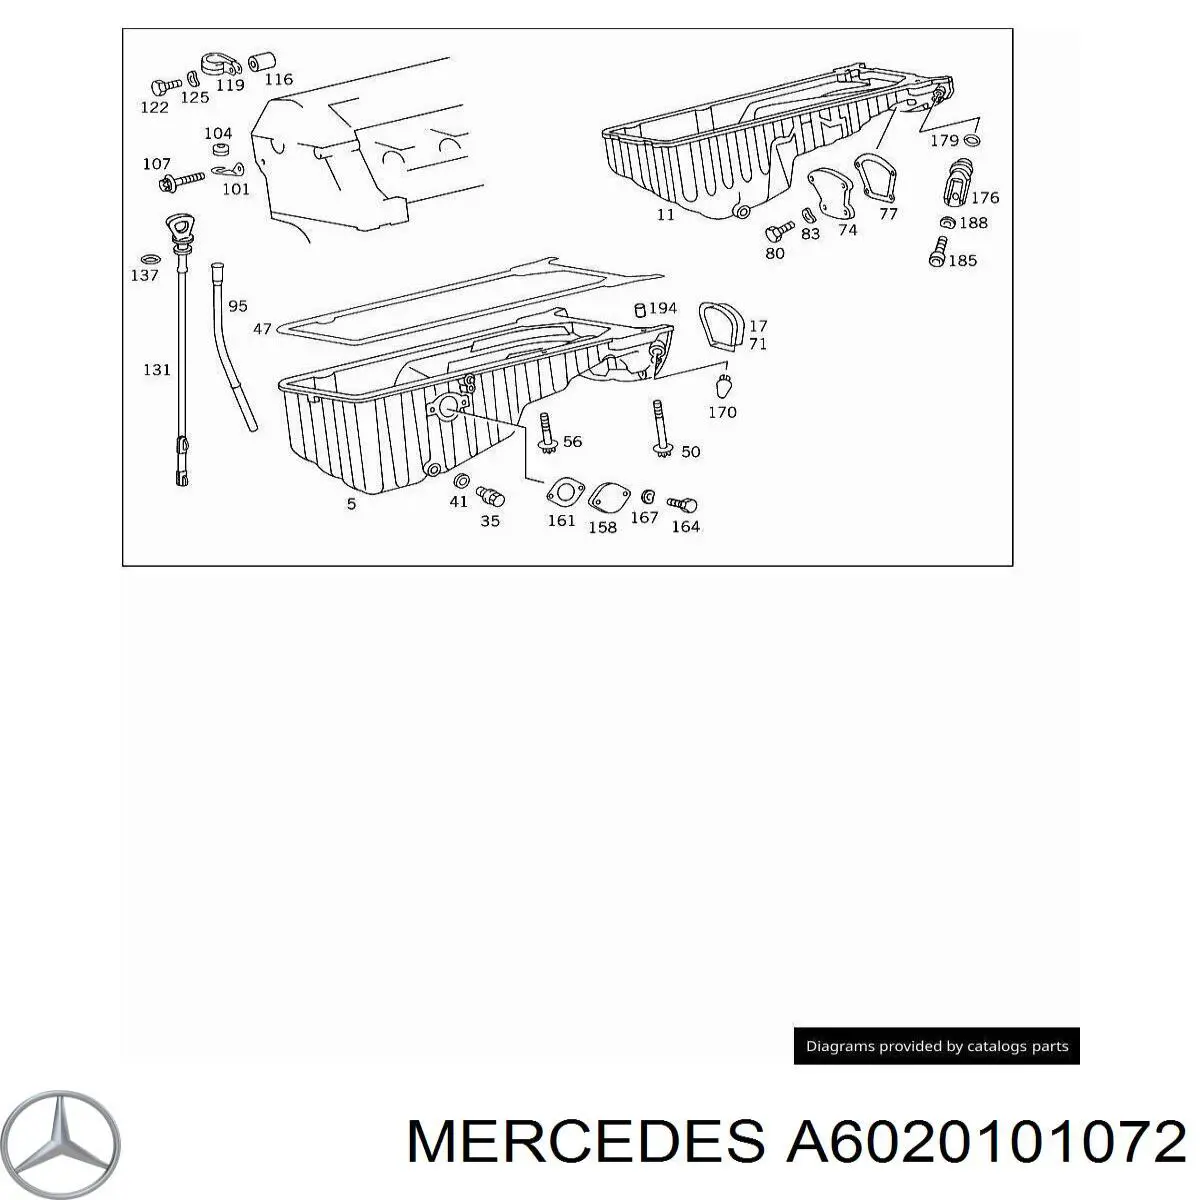 A6020101072 Mercedes sonda (indicador do nível de óleo no motor)